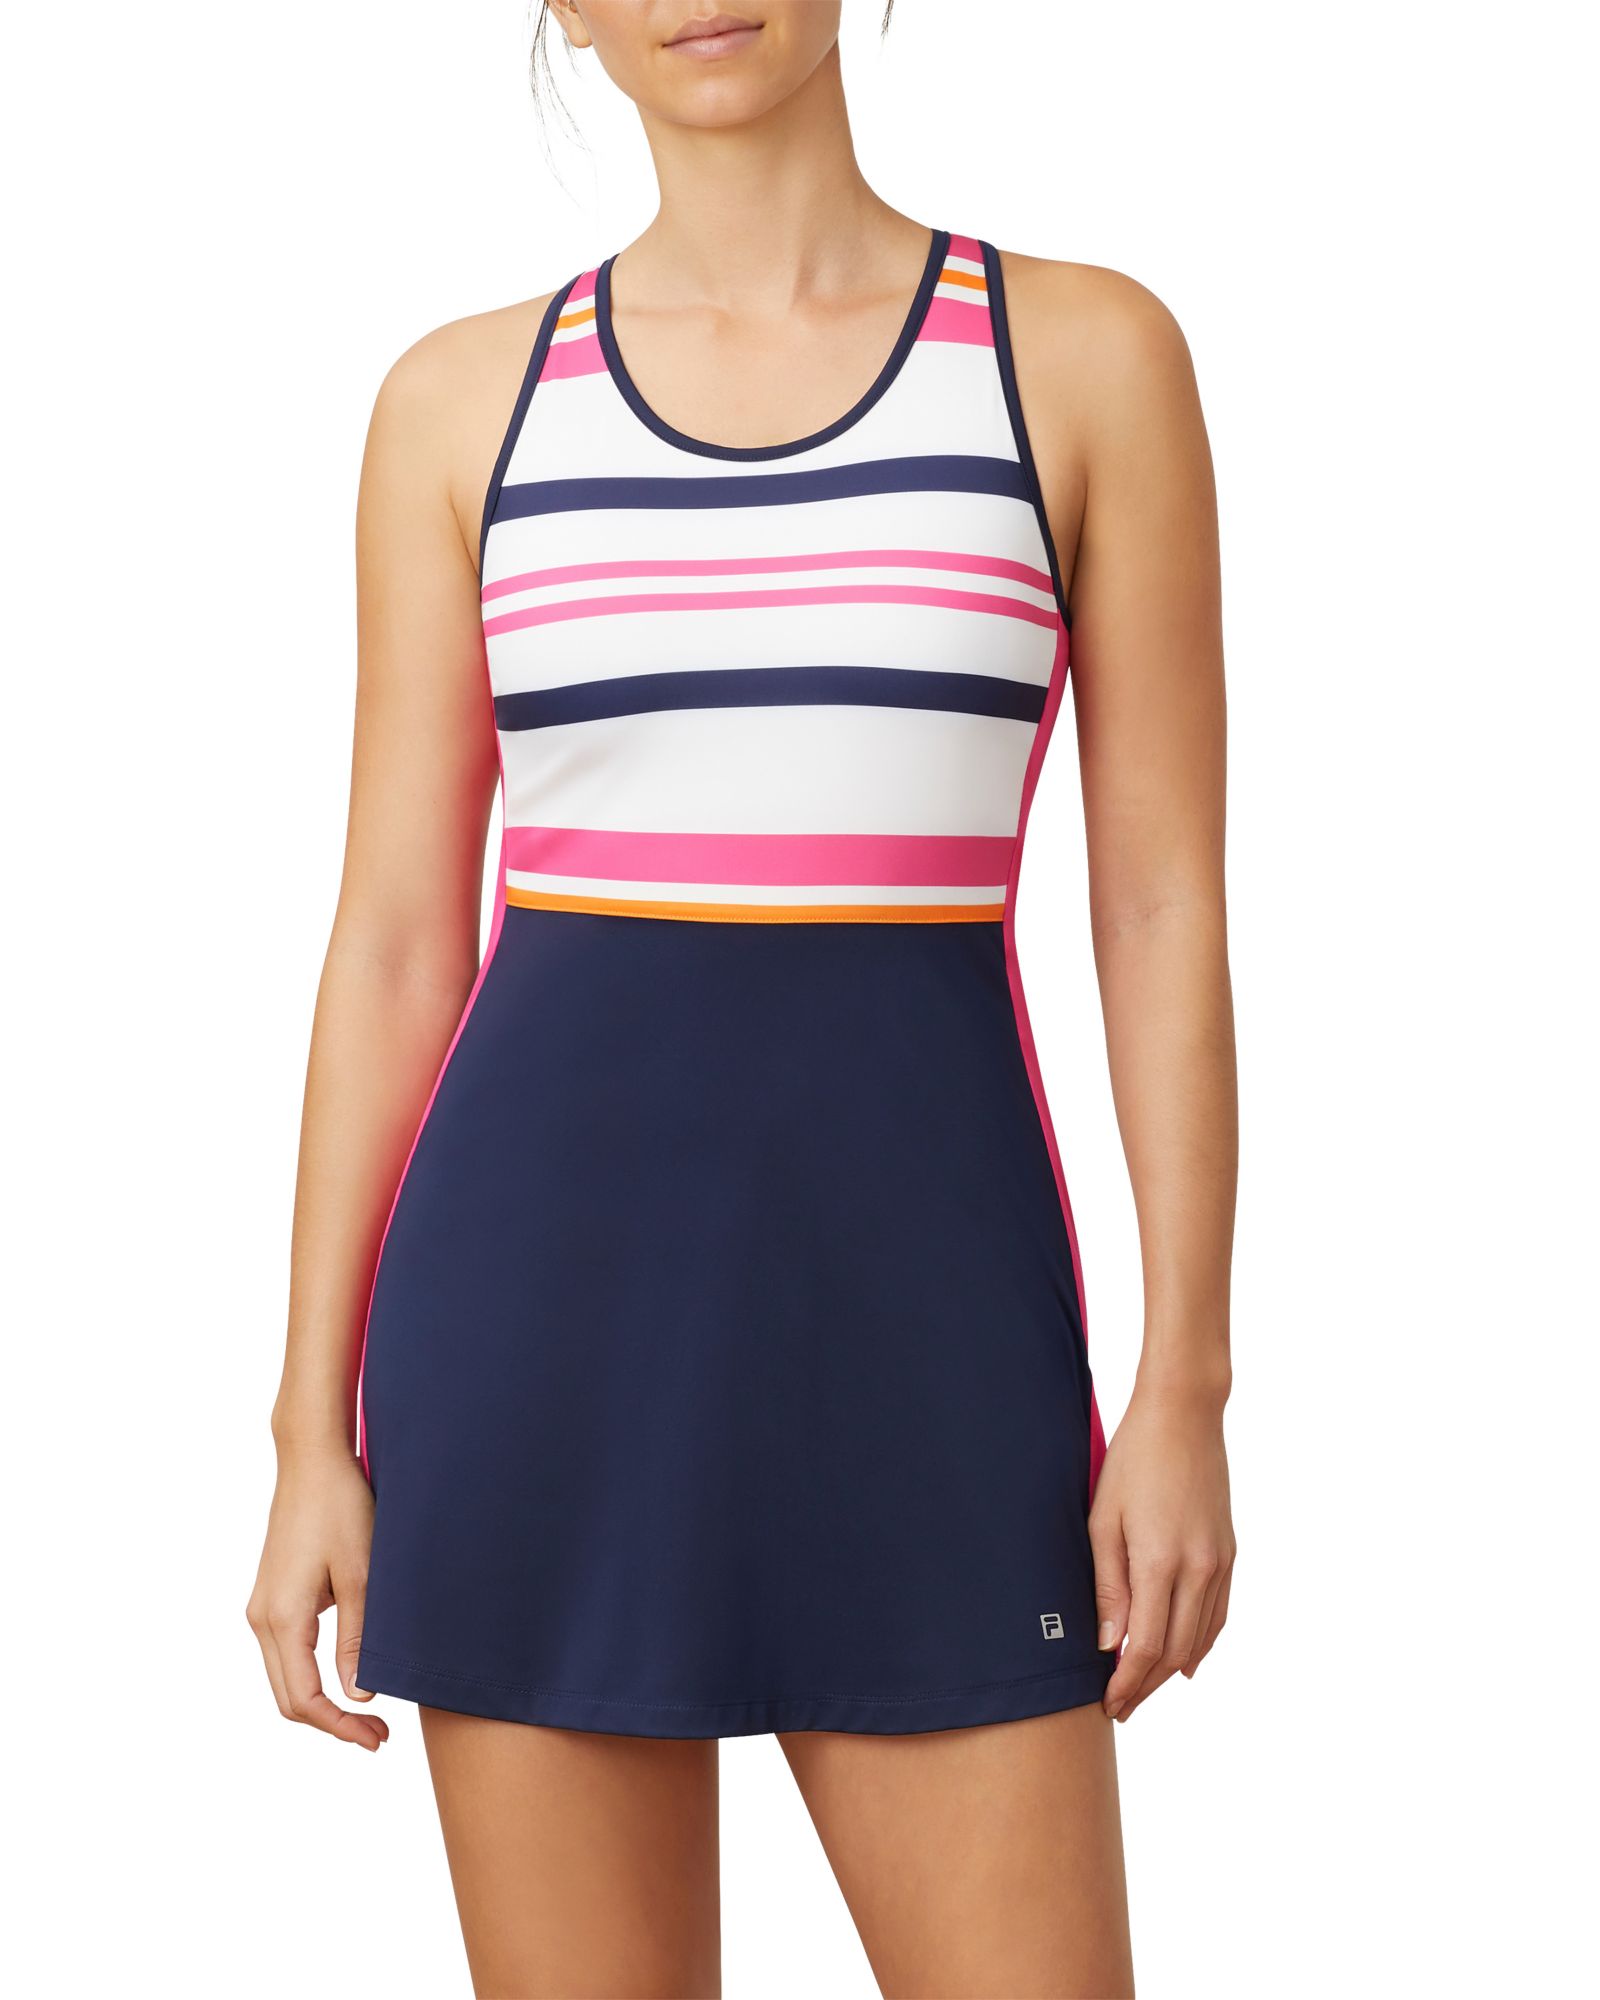 fila womens tennis dress